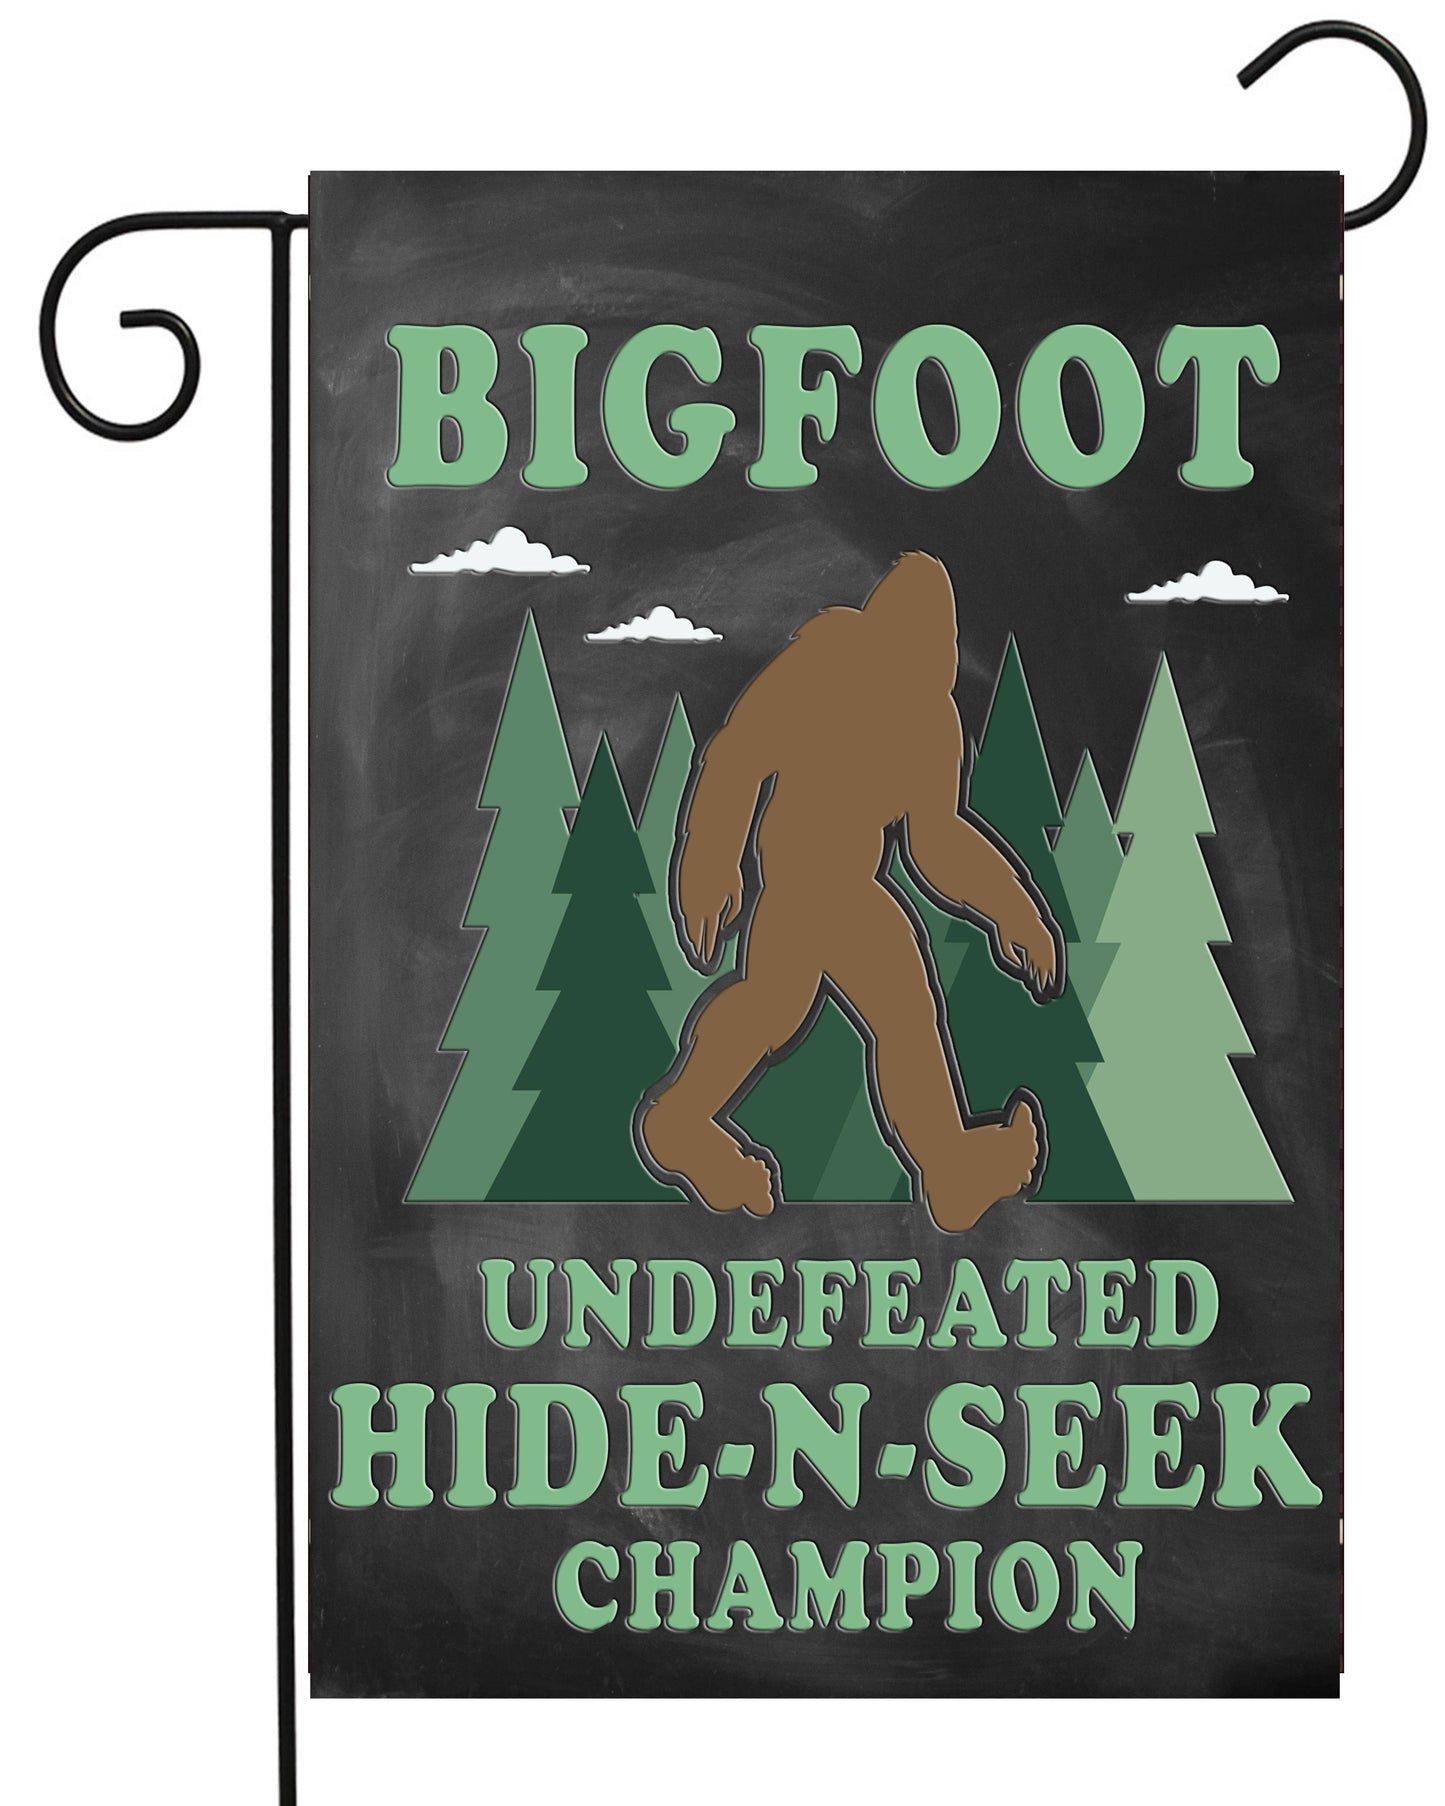 Big Foot Hide and Seek Garden Flag G2380